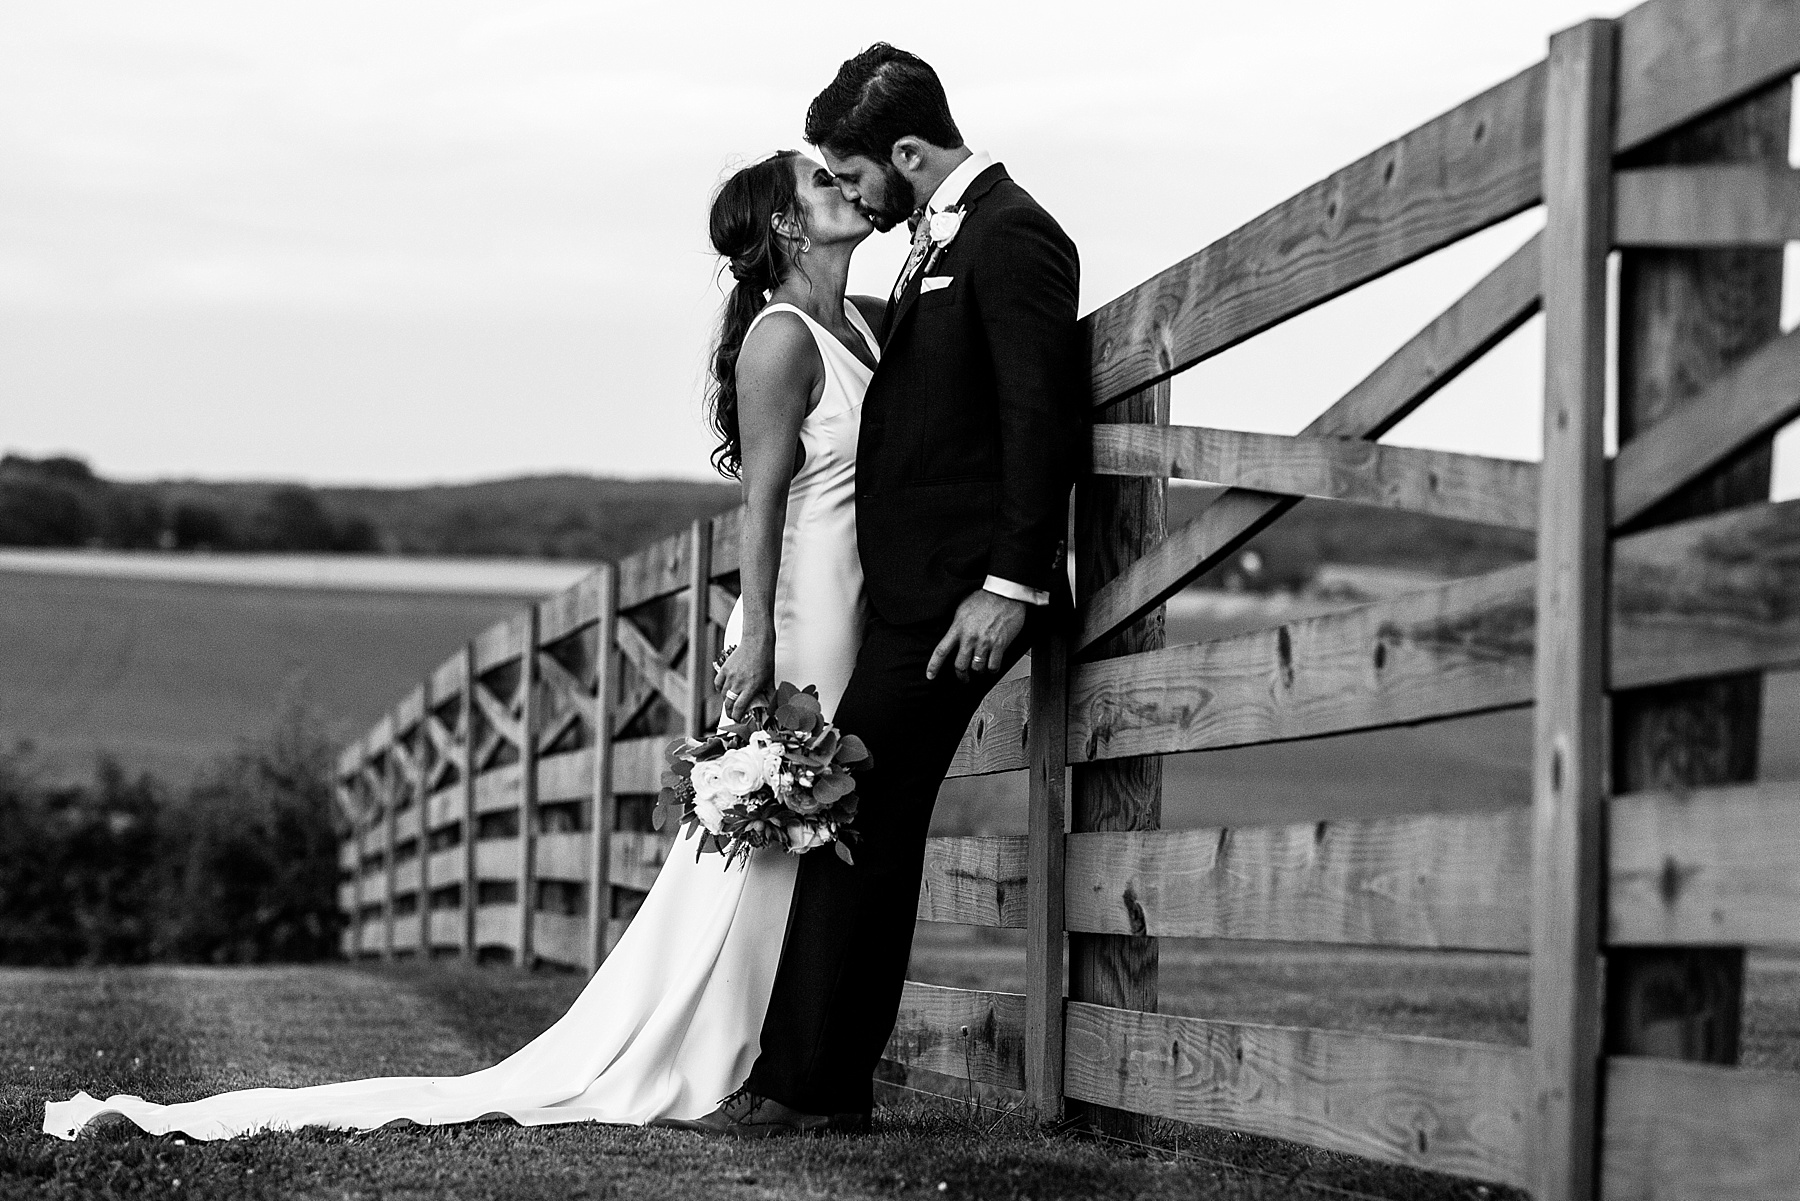 Walker's Overlook wedding photos by Alexandra Mandato Photography